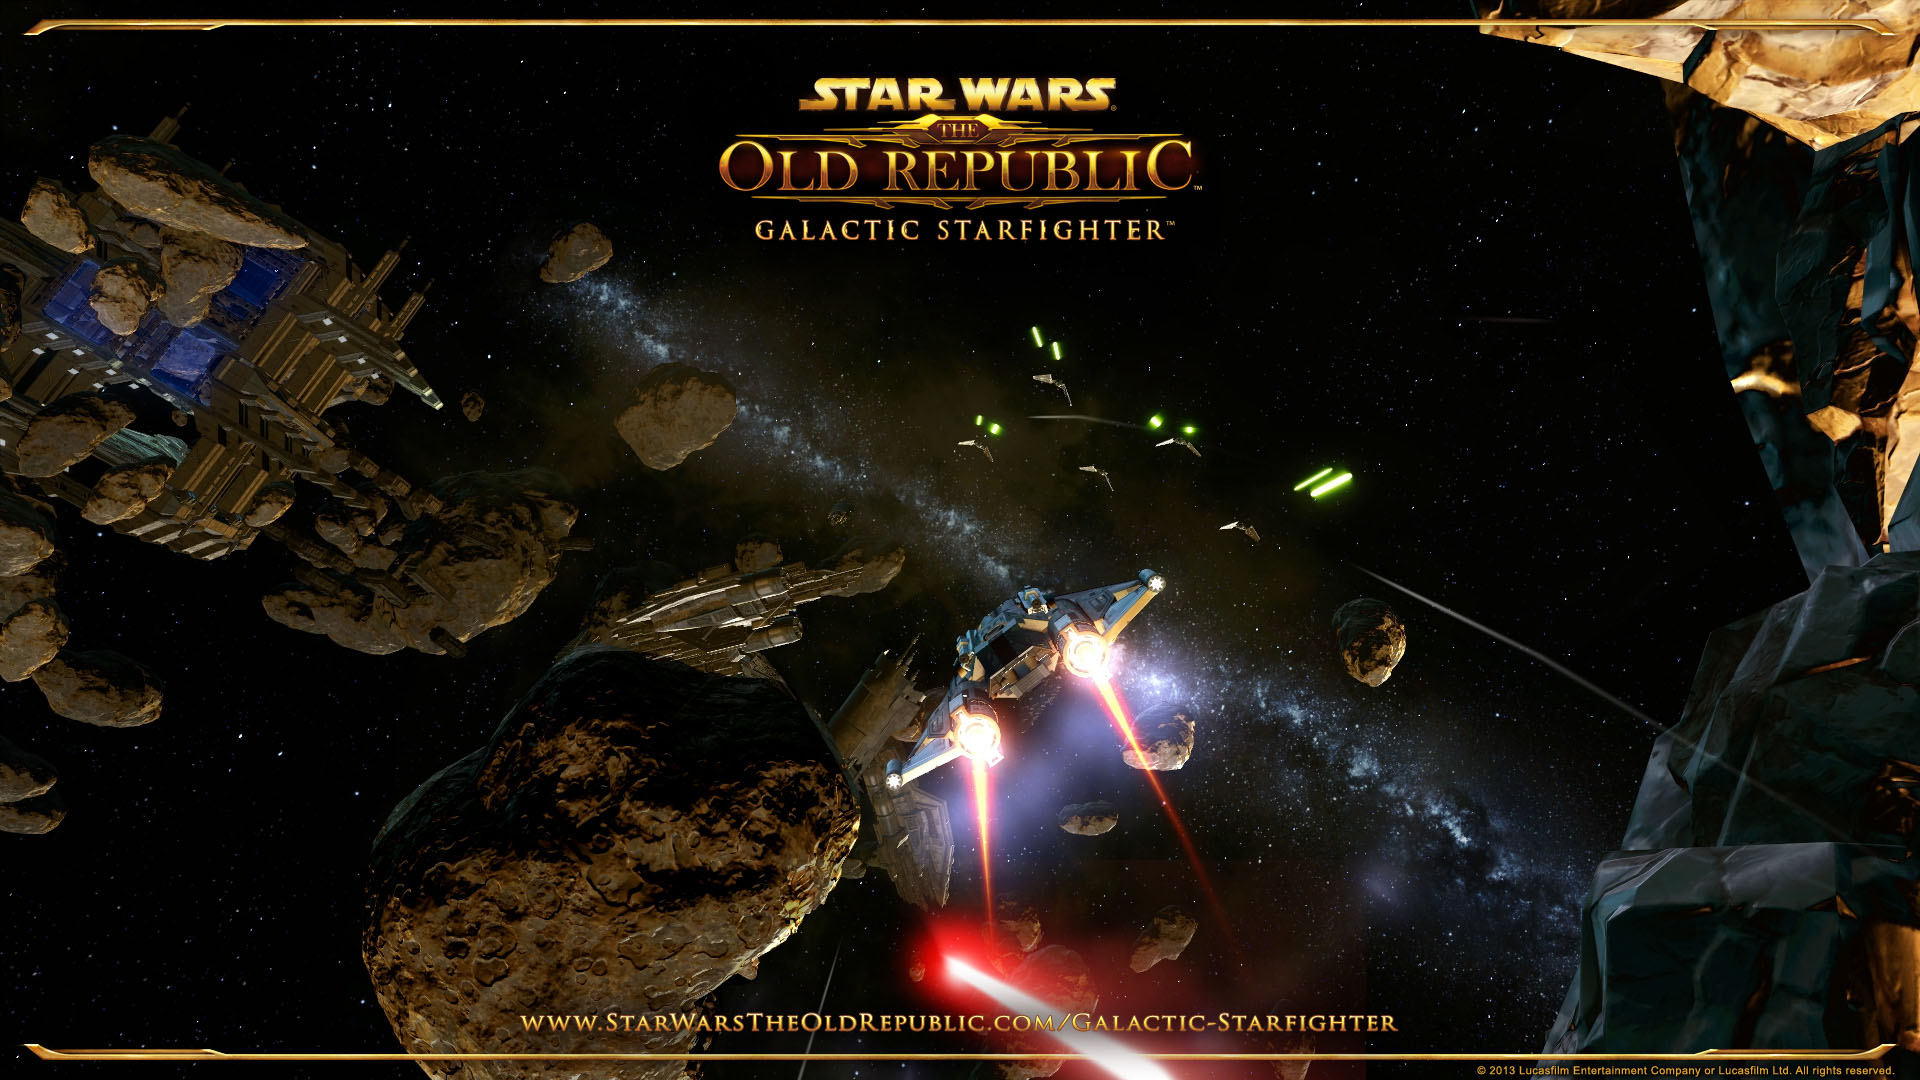 Star Wars The Old Republic HD Wallpaper